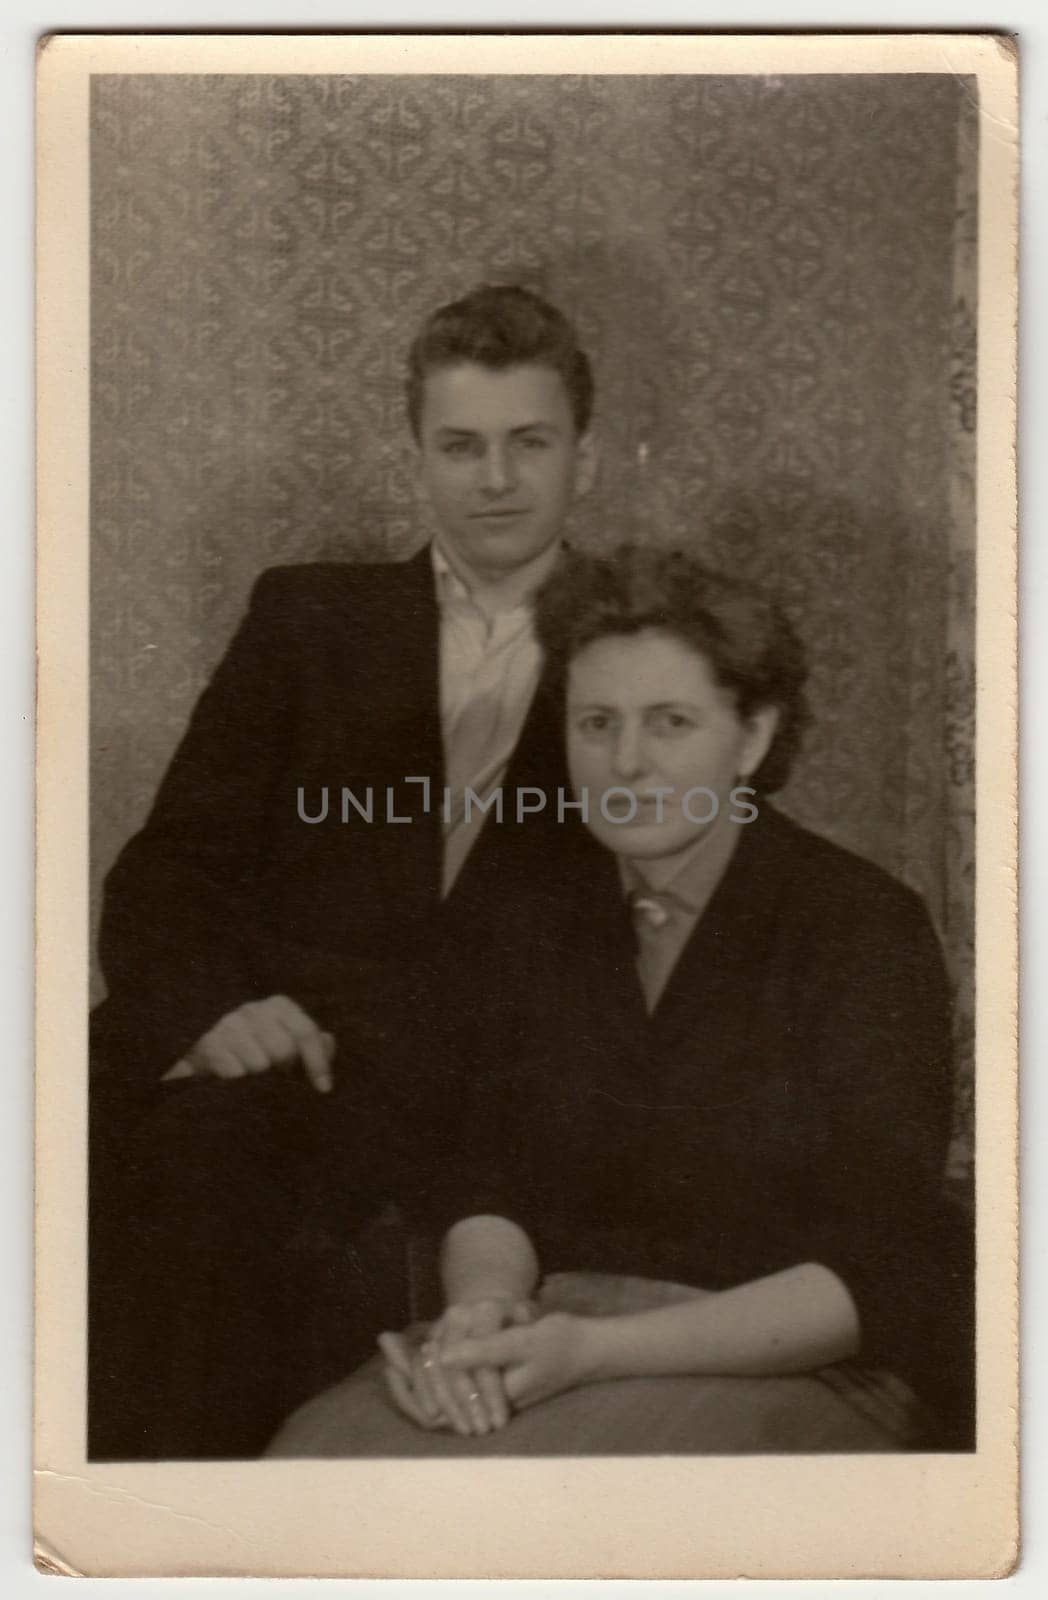 THE CZECHOSLOVAK SOCIALIST REPUBLIC - CIRCA 1960s: A vintage photo shows mother with adolescent son.